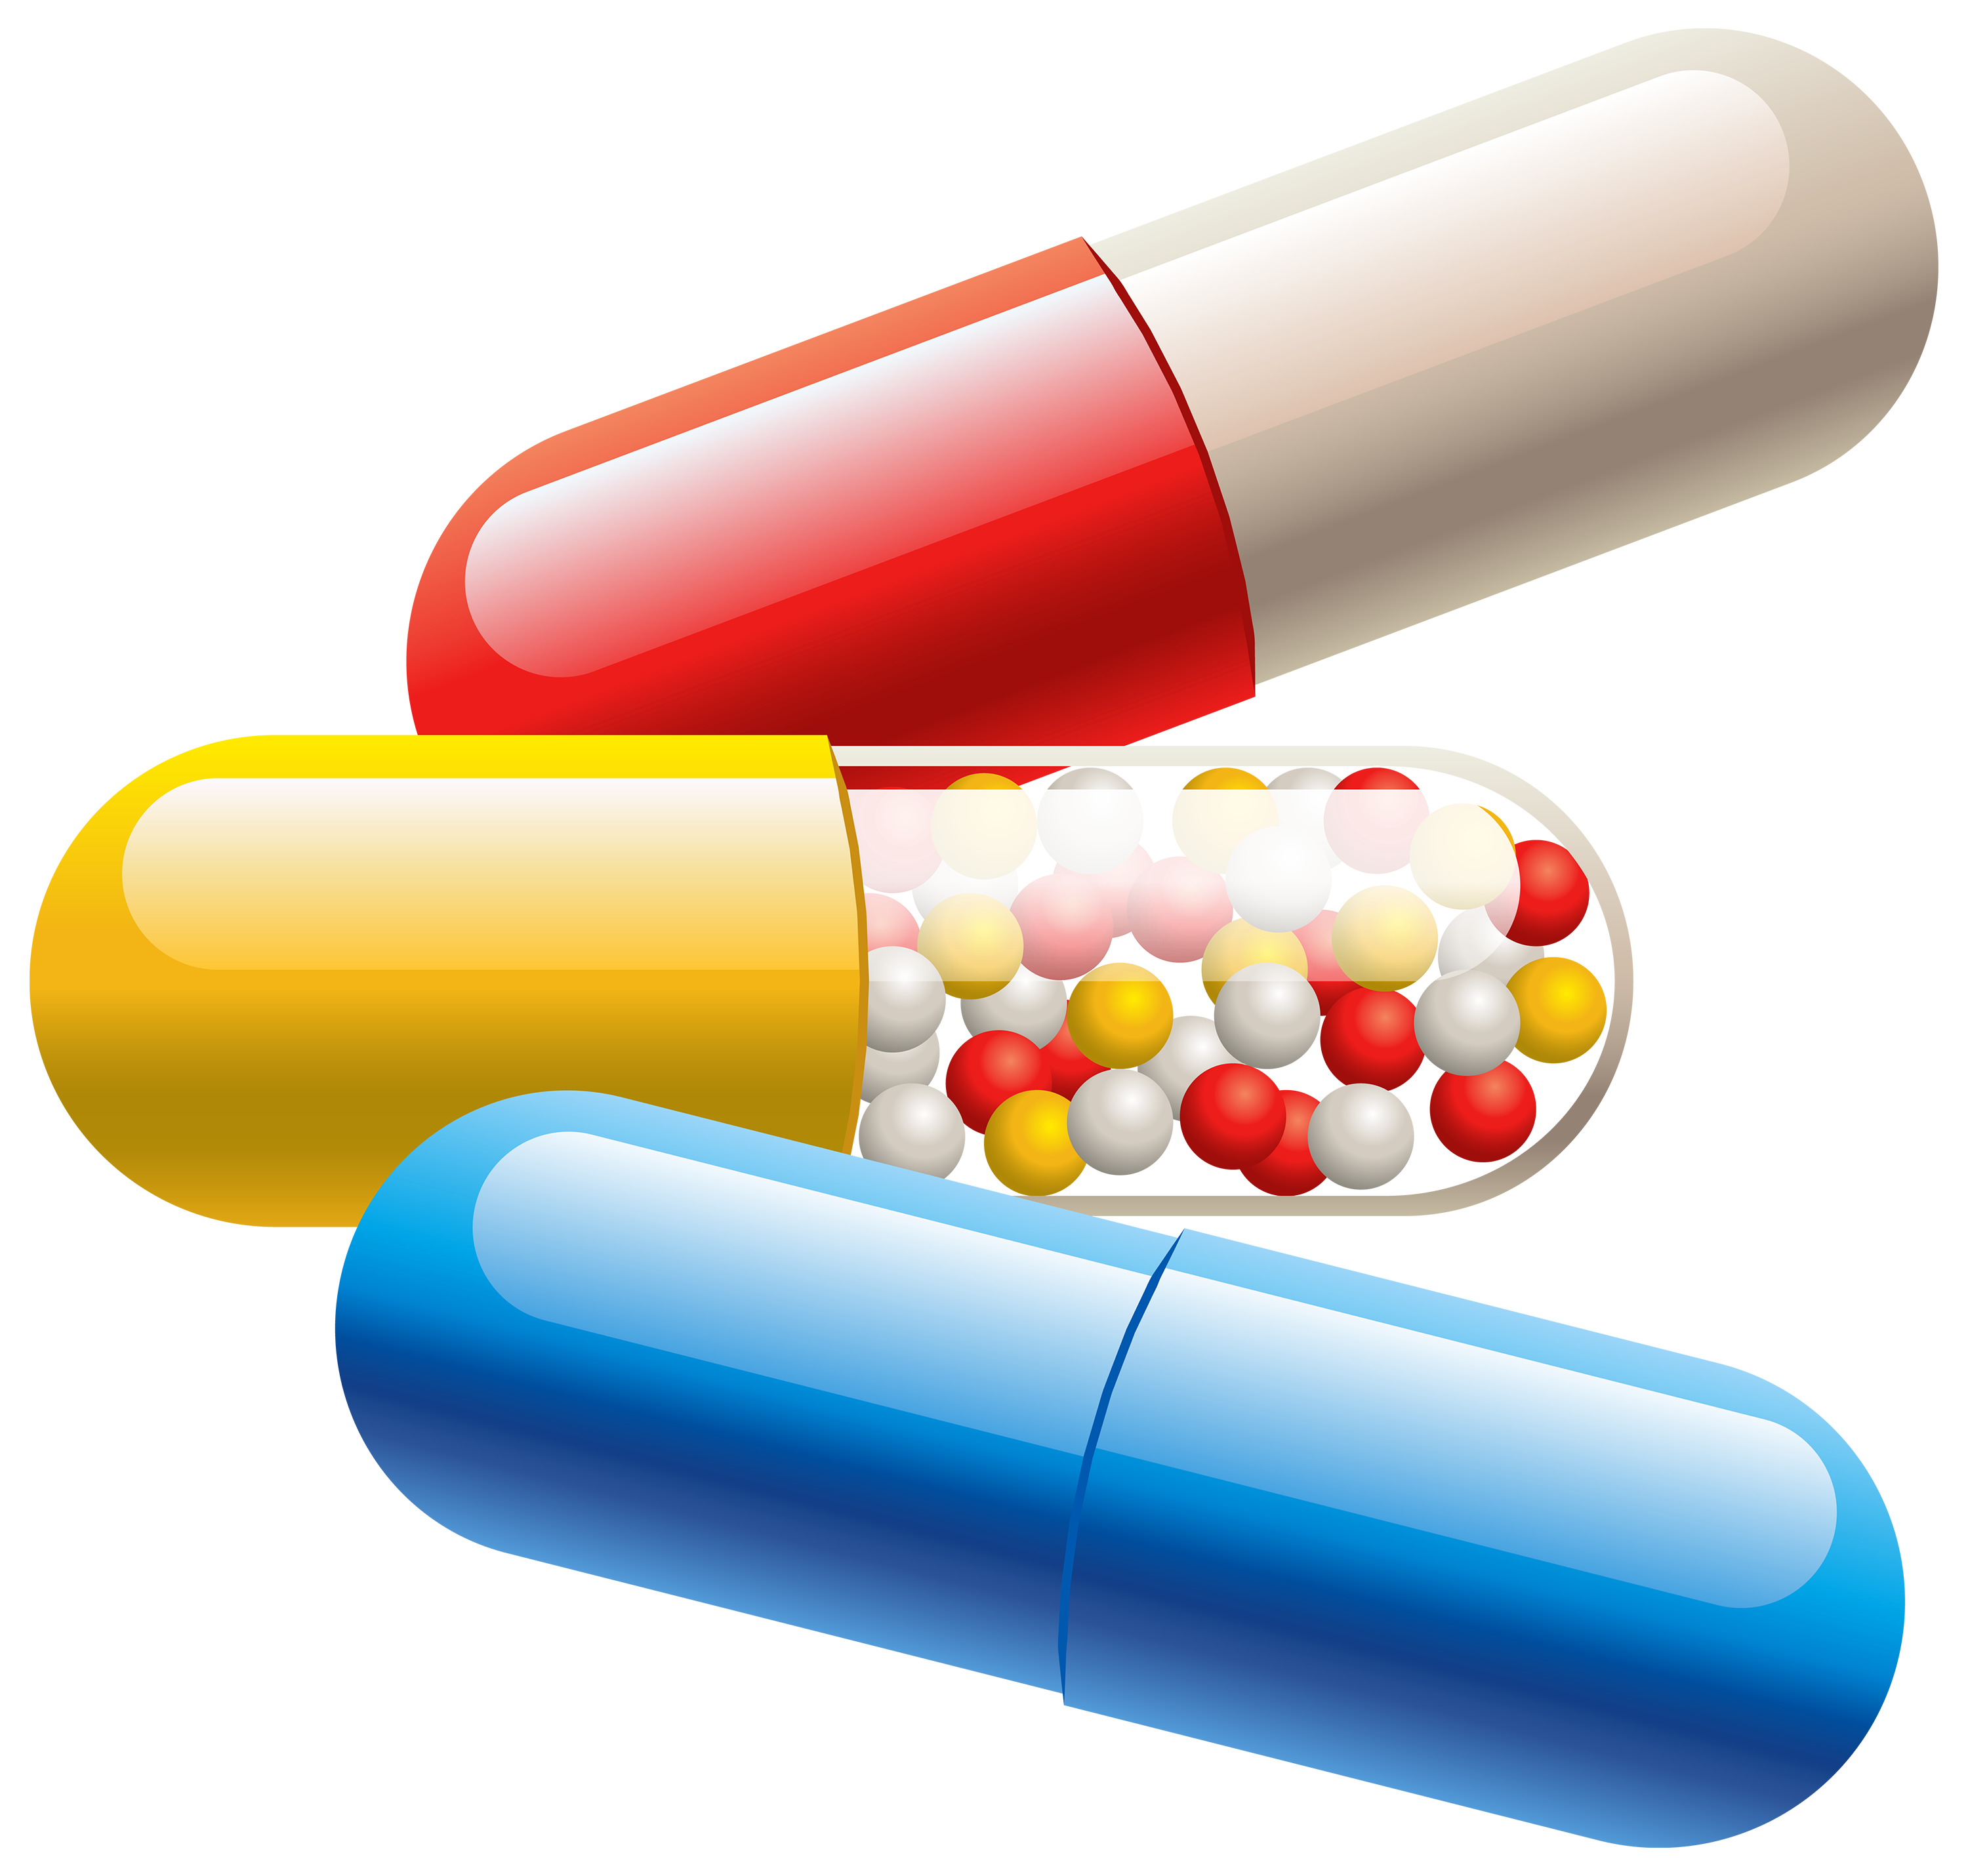 Pharmaceutical Capsule Tablet Drug Pills Free HQ Image Clipart